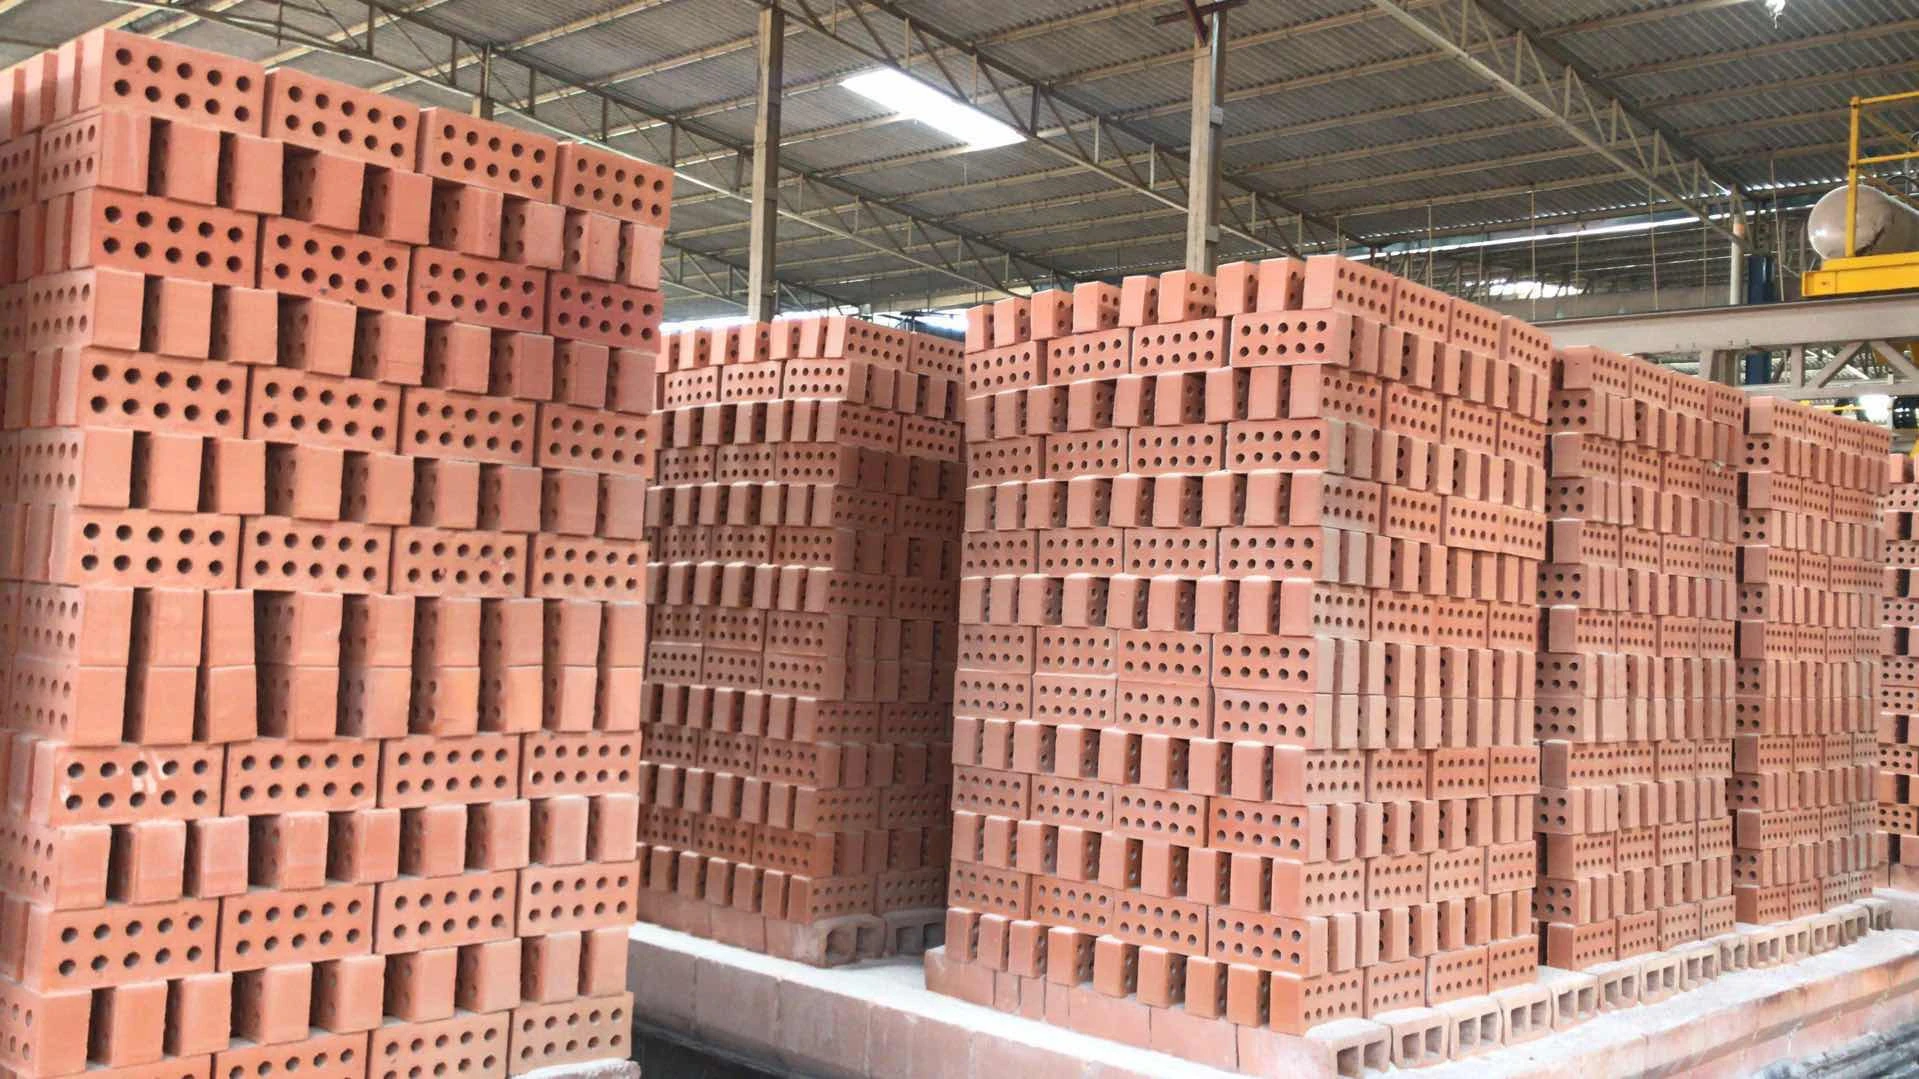 bricks making machine lowest price tunnel kiln for ceramic brick burning oven red bricks automatic production line